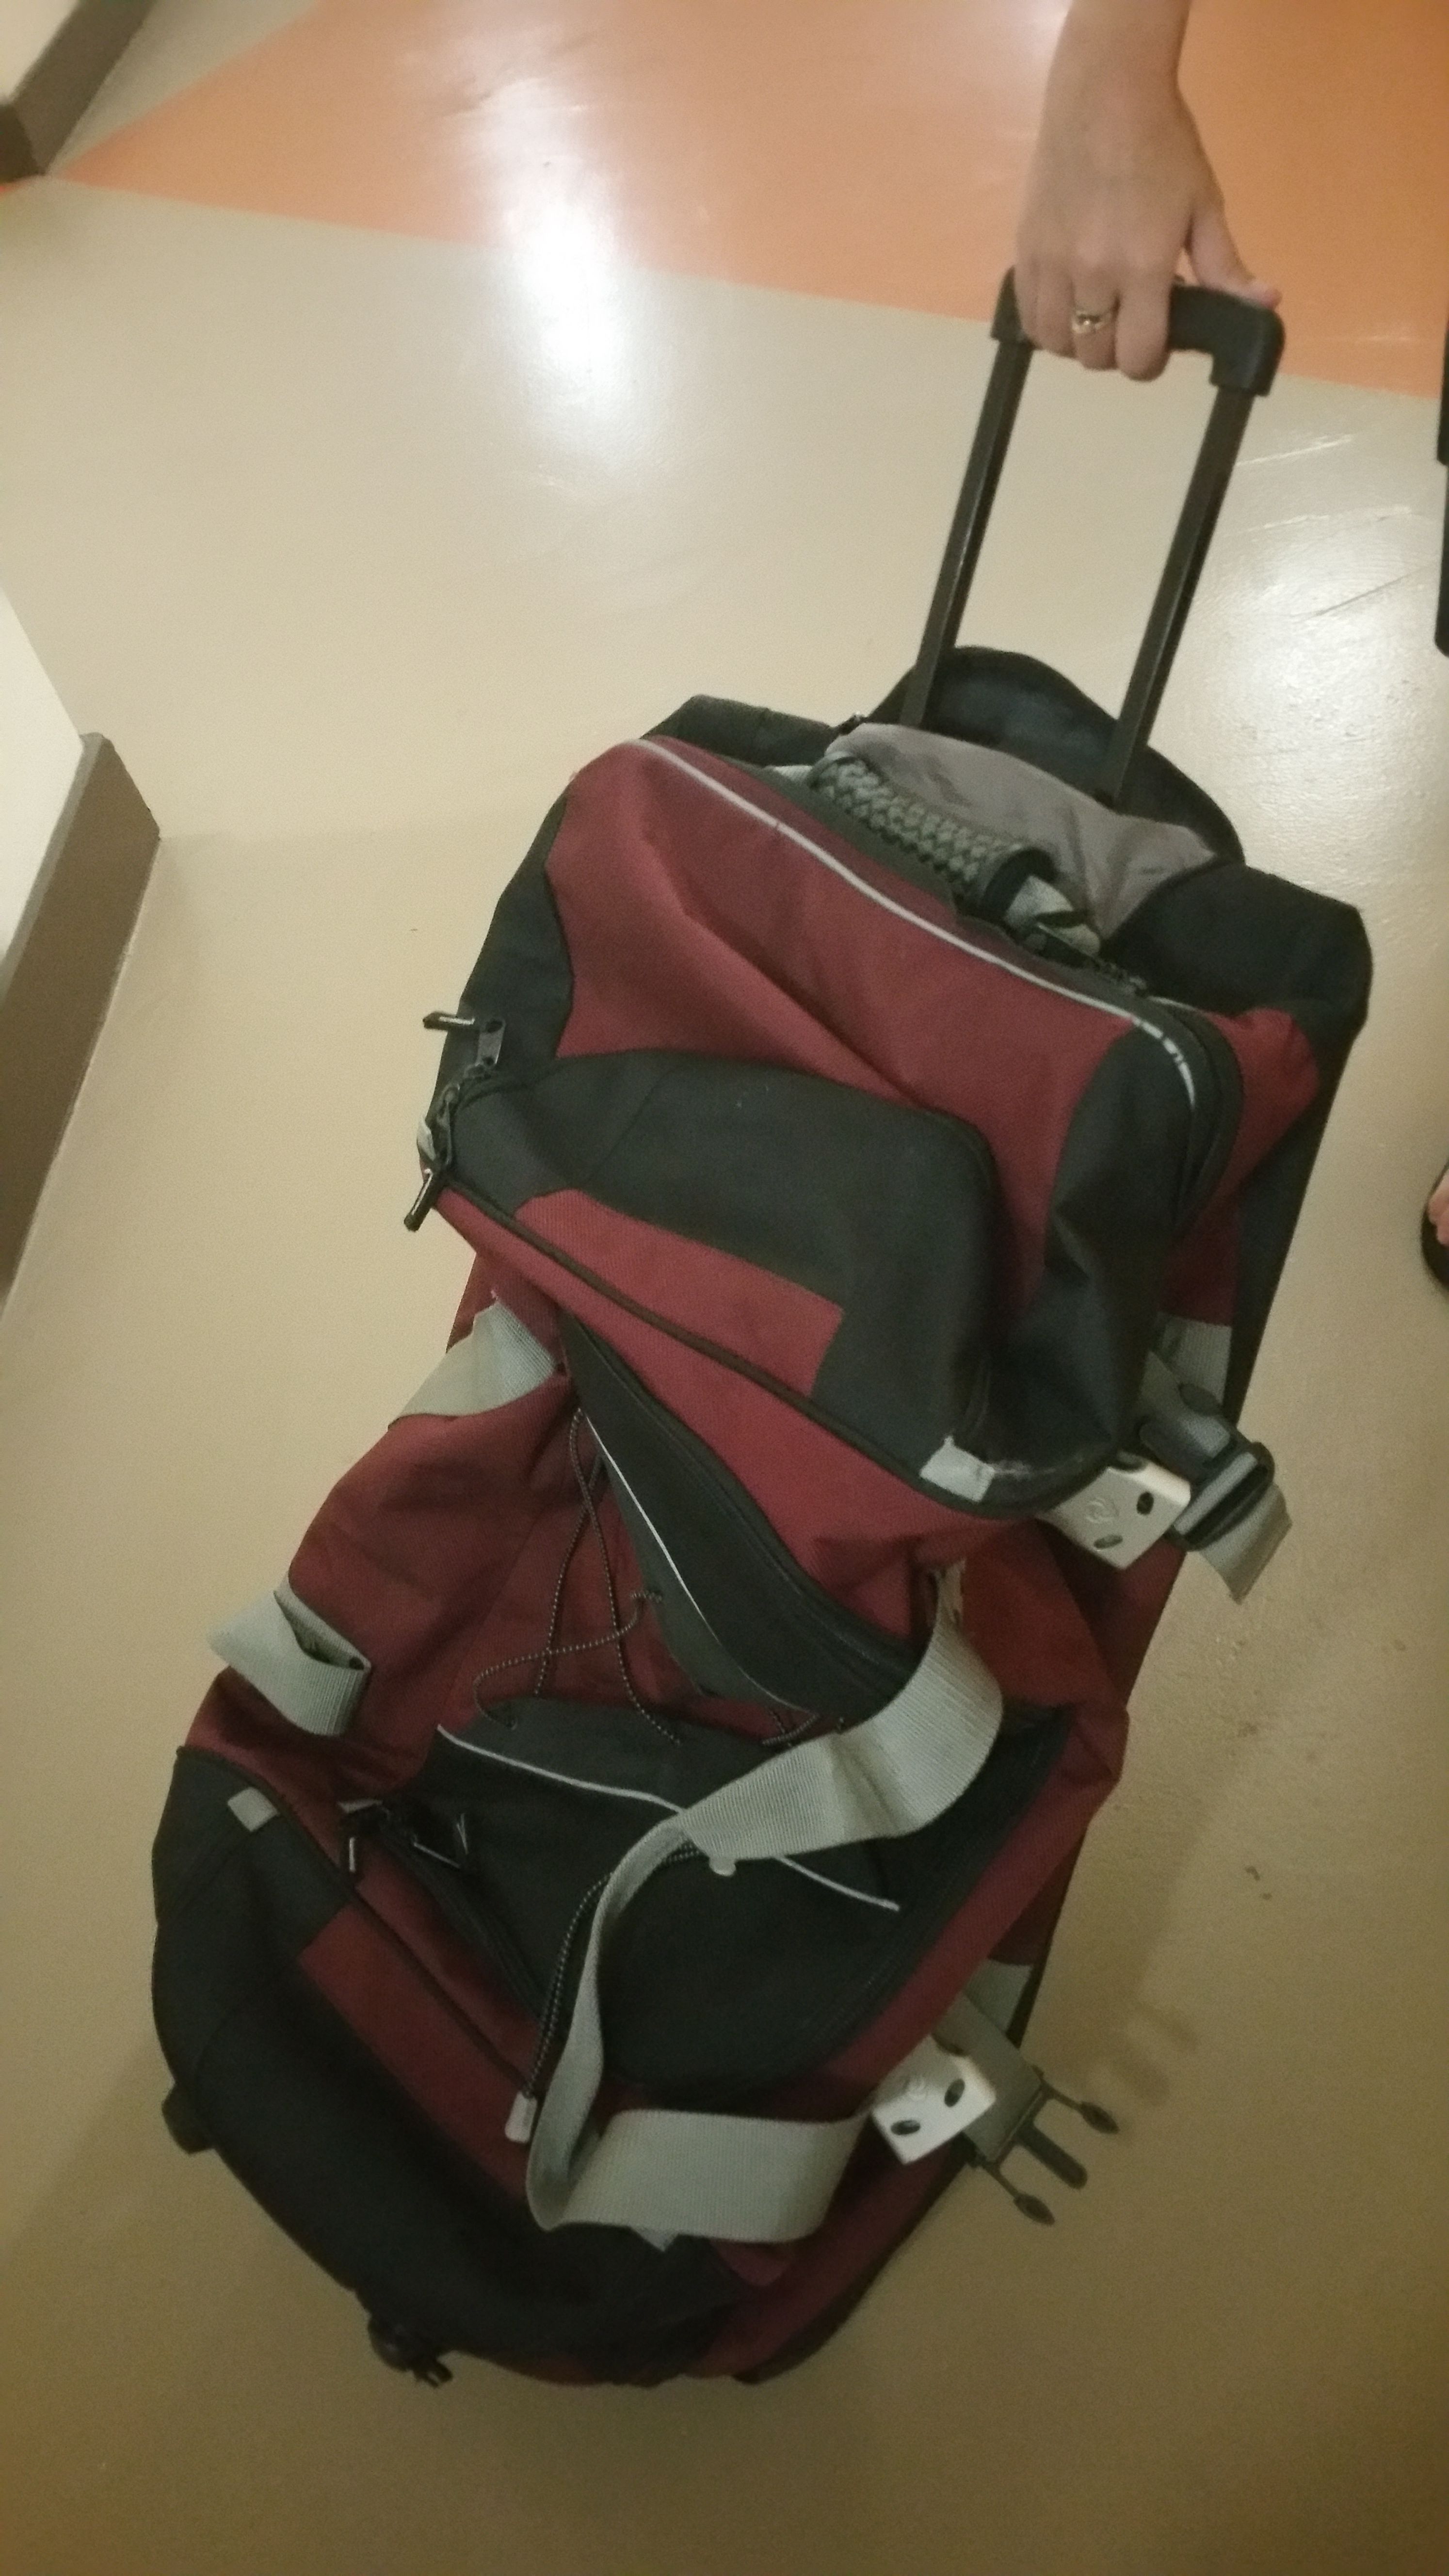 Samsonite travel bag